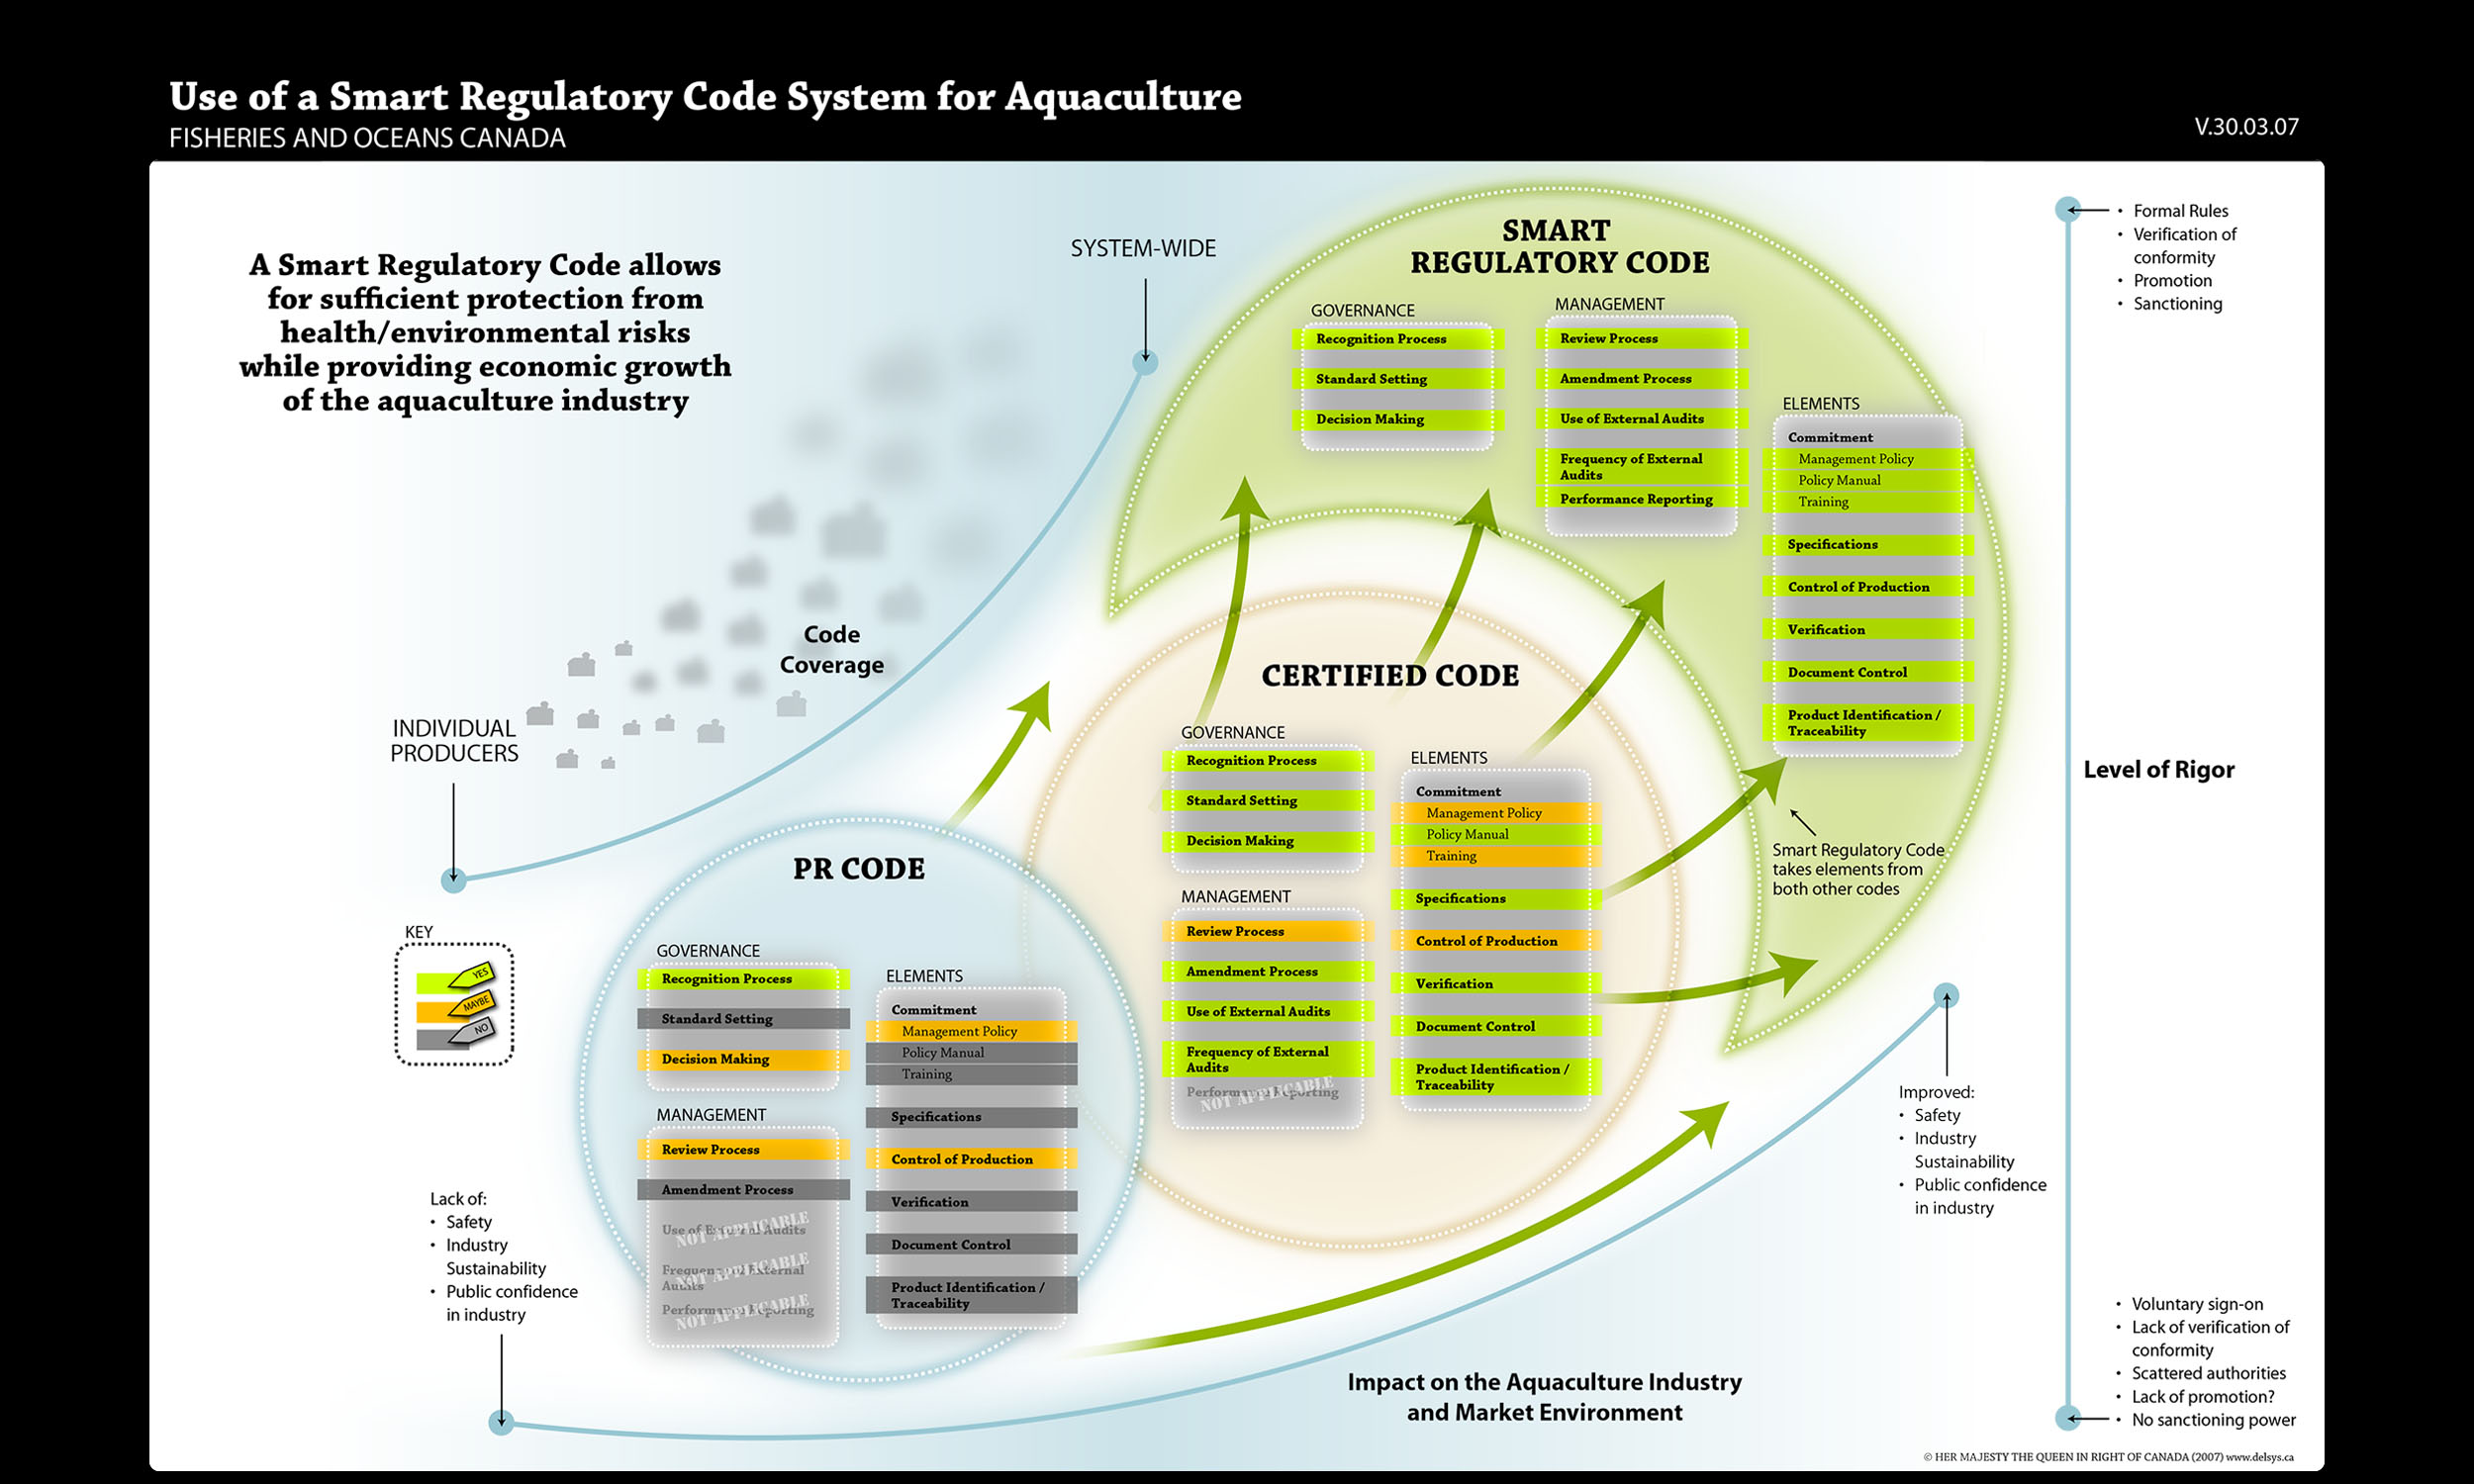 Use of a Smart Regulatory Code for Aquaculture